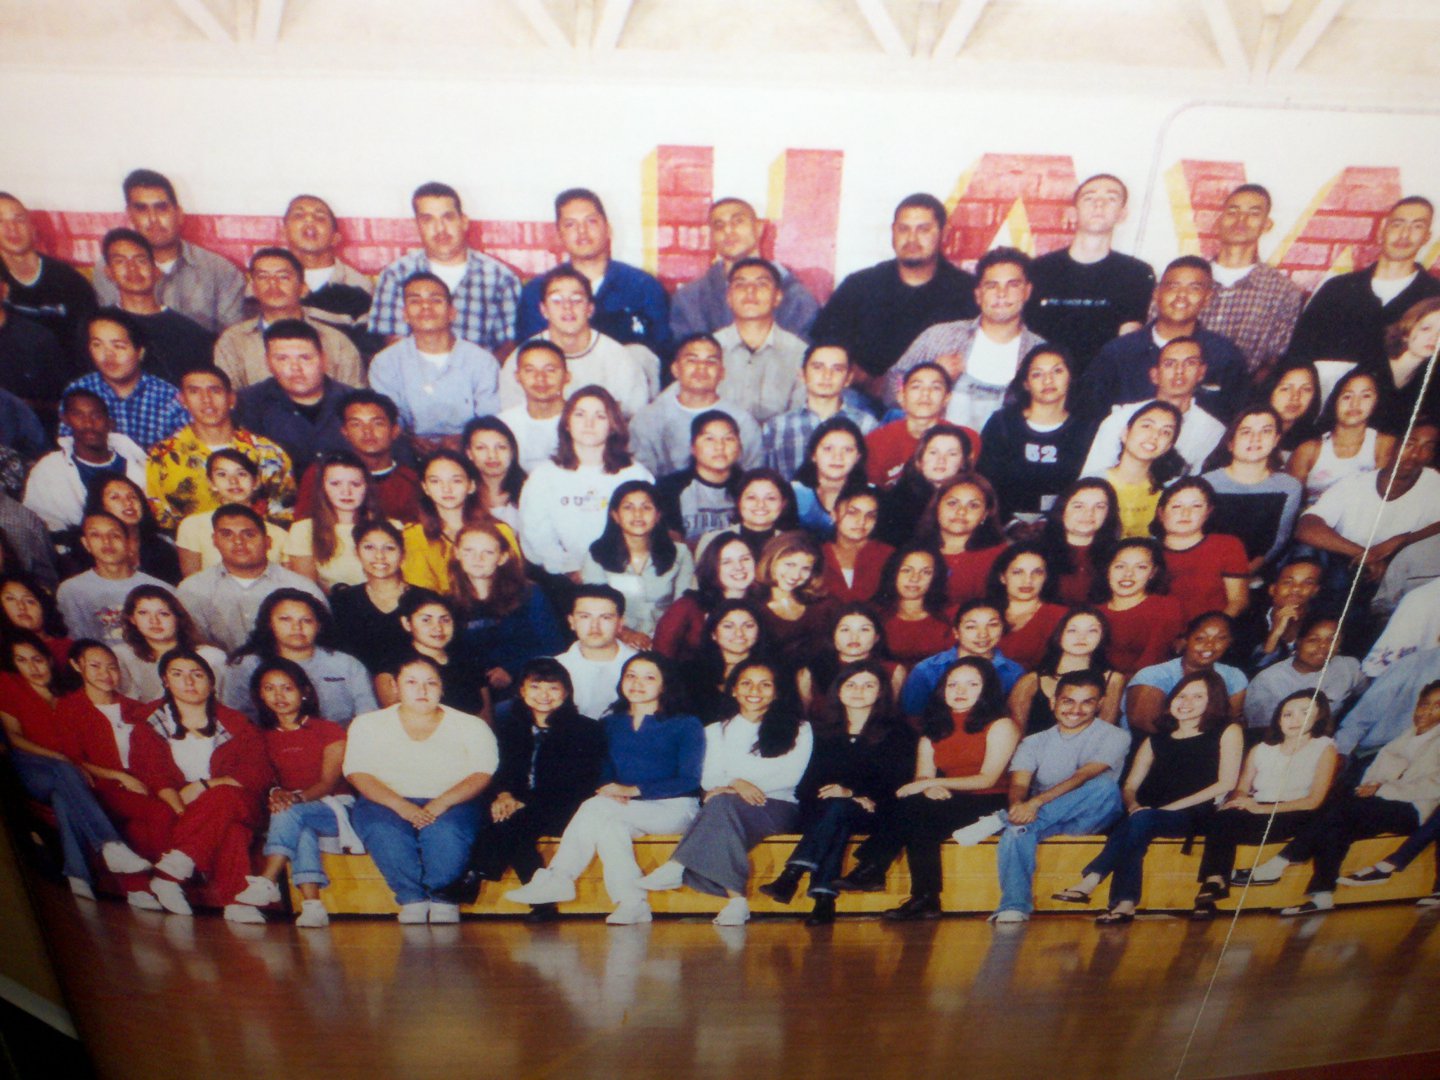 Hawthorne High School Reunion 2001: Blast from the Past